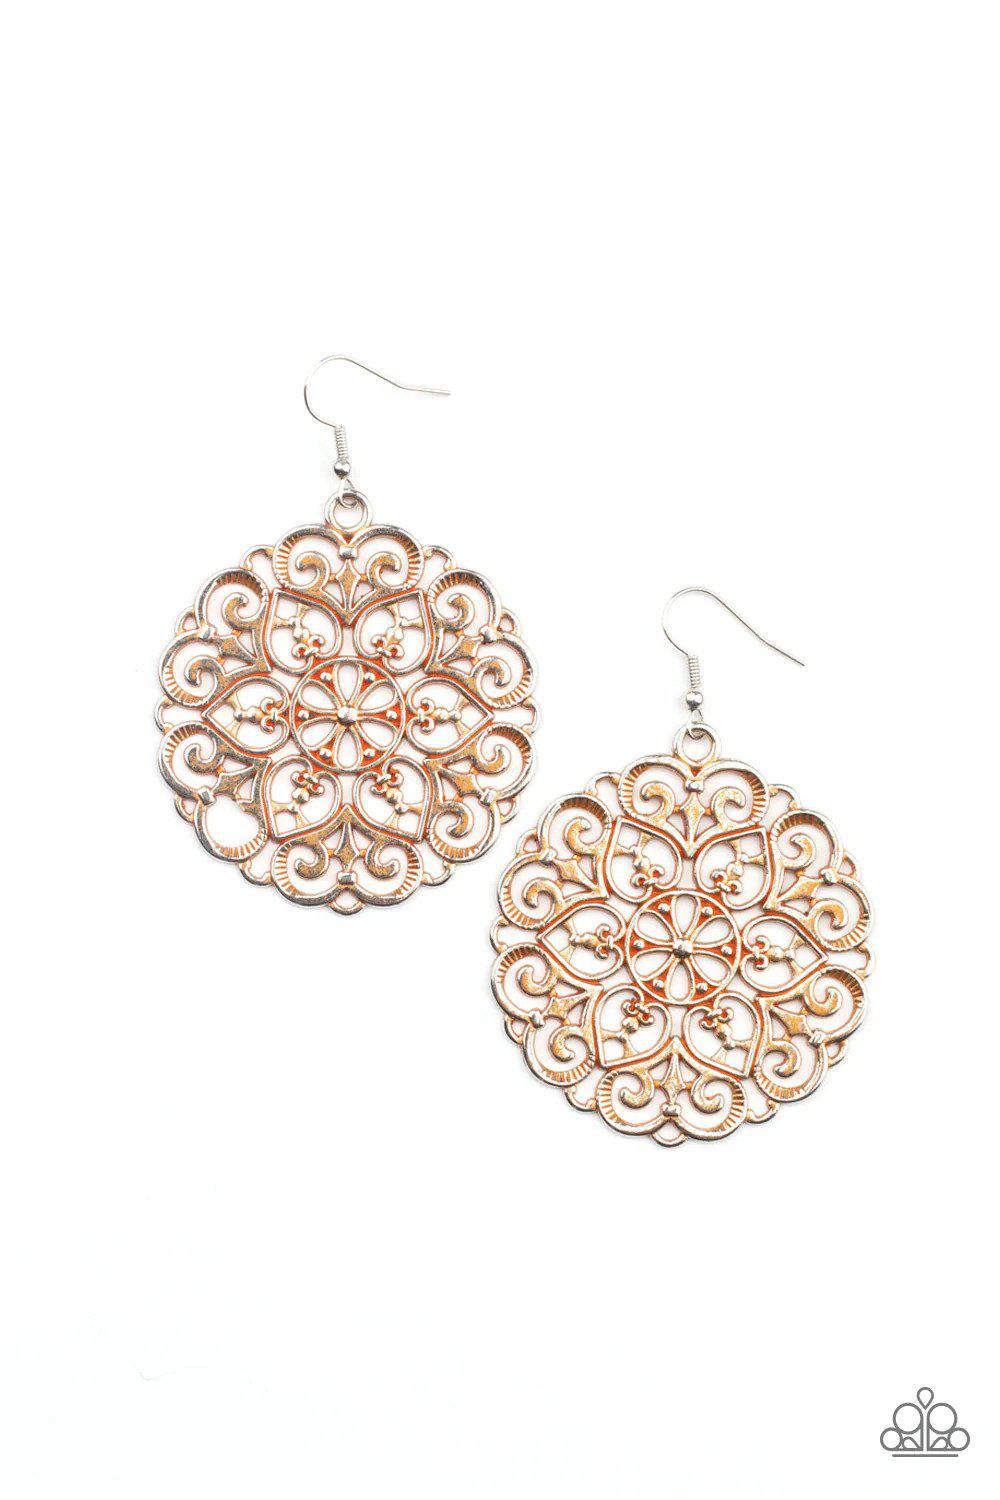 MANDALA Effect Orange Earrings - Paparazzi Accessories- lightbox - CarasShop.com - $5 Jewelry by Cara Jewels